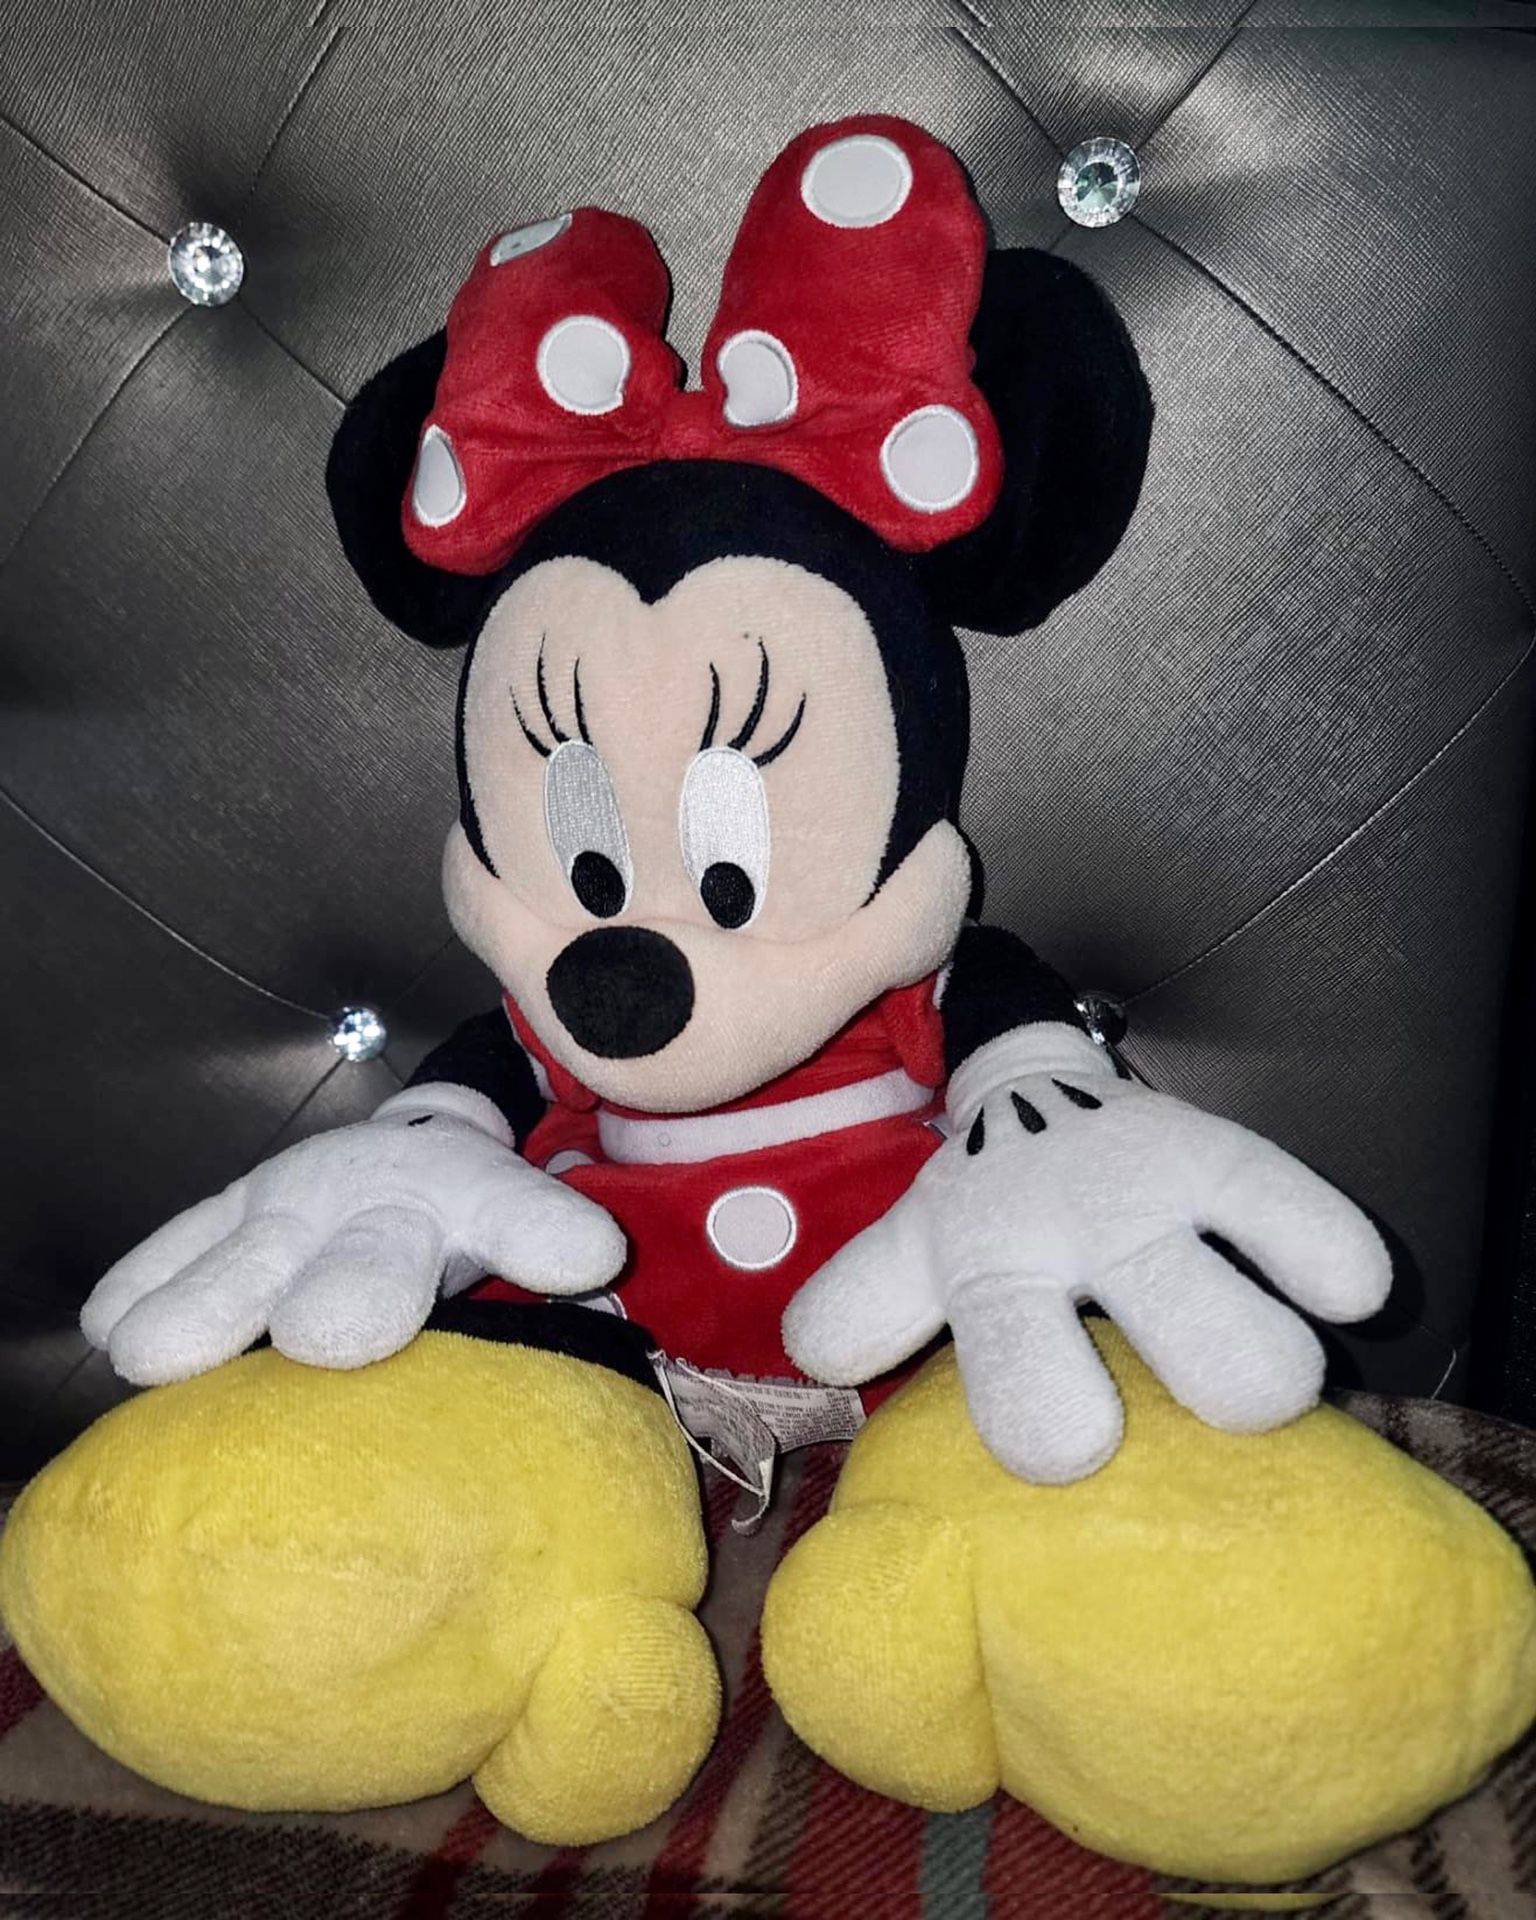 Authentic Walt Disney Minnie Mouse Stuffed Animal!